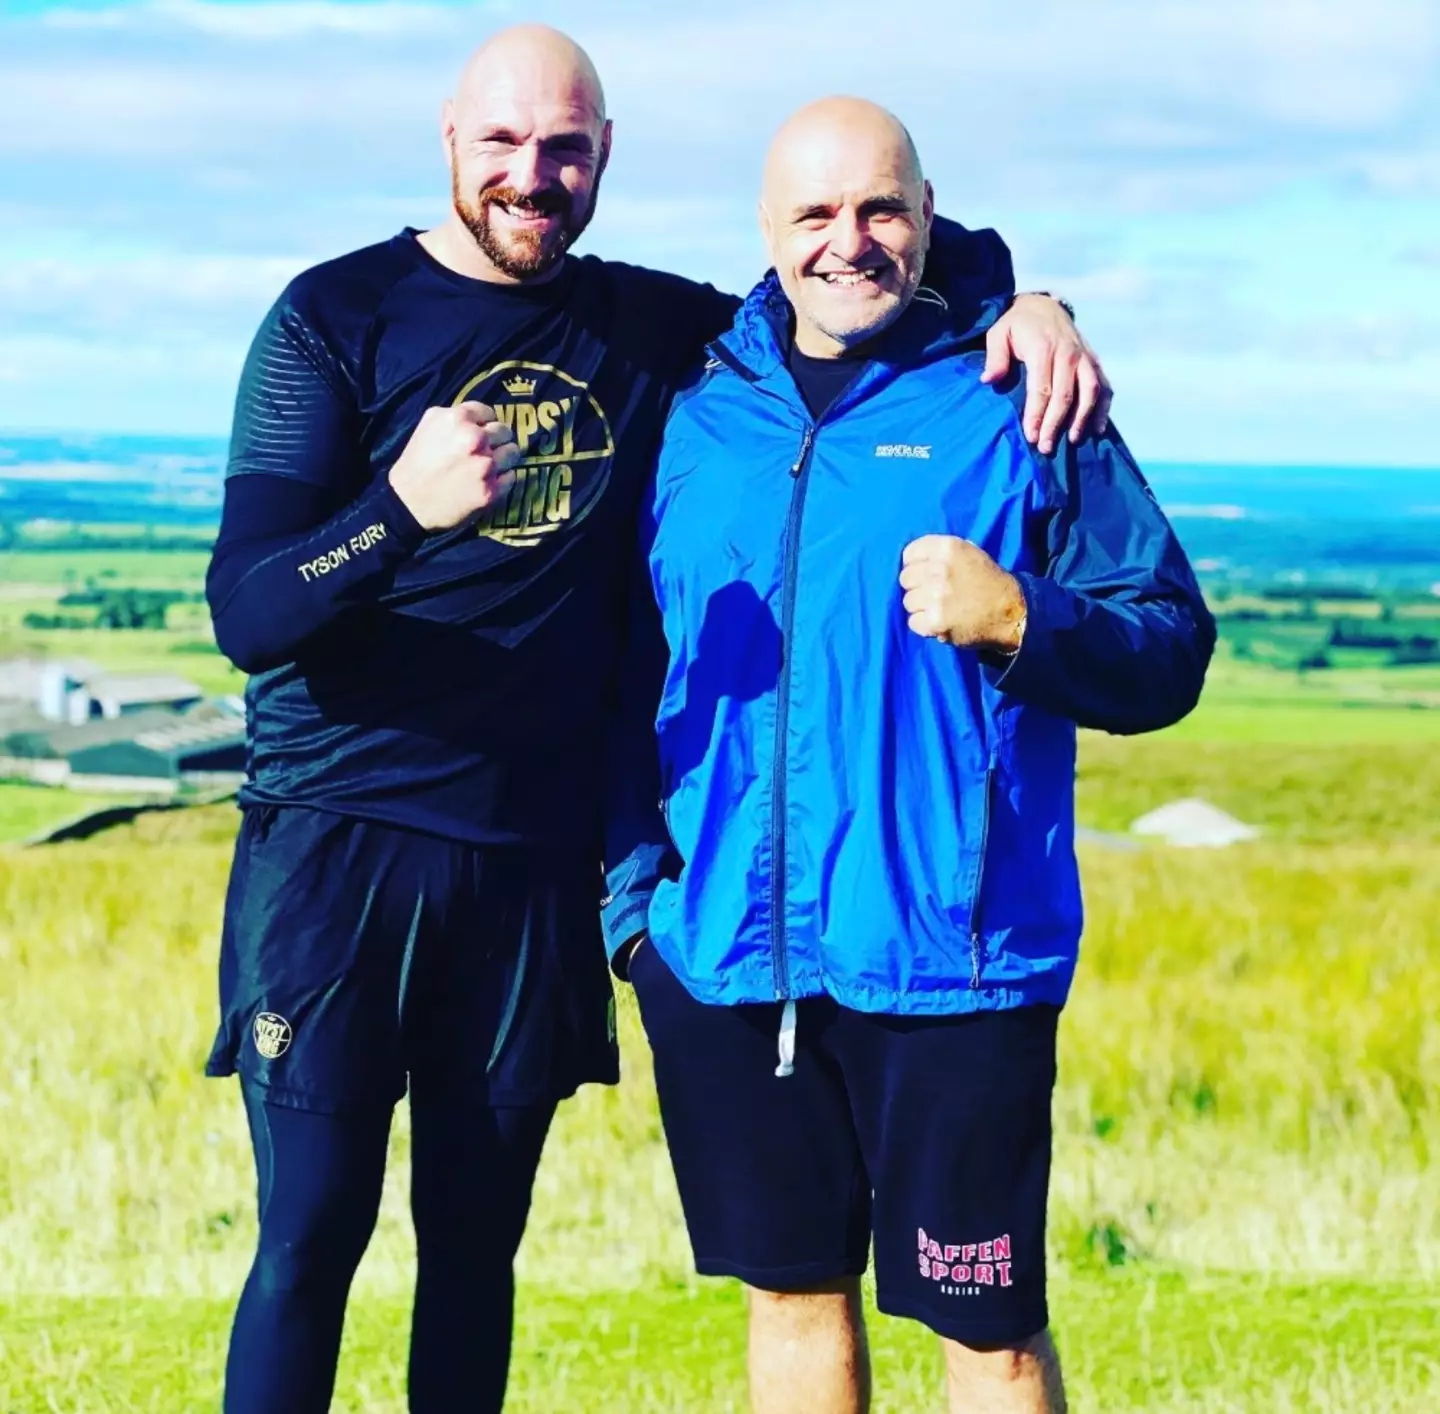 John Fury is the father of heavyweight boxing champion Tyson Fury (Image: Instagram/GypsyJohnFury)